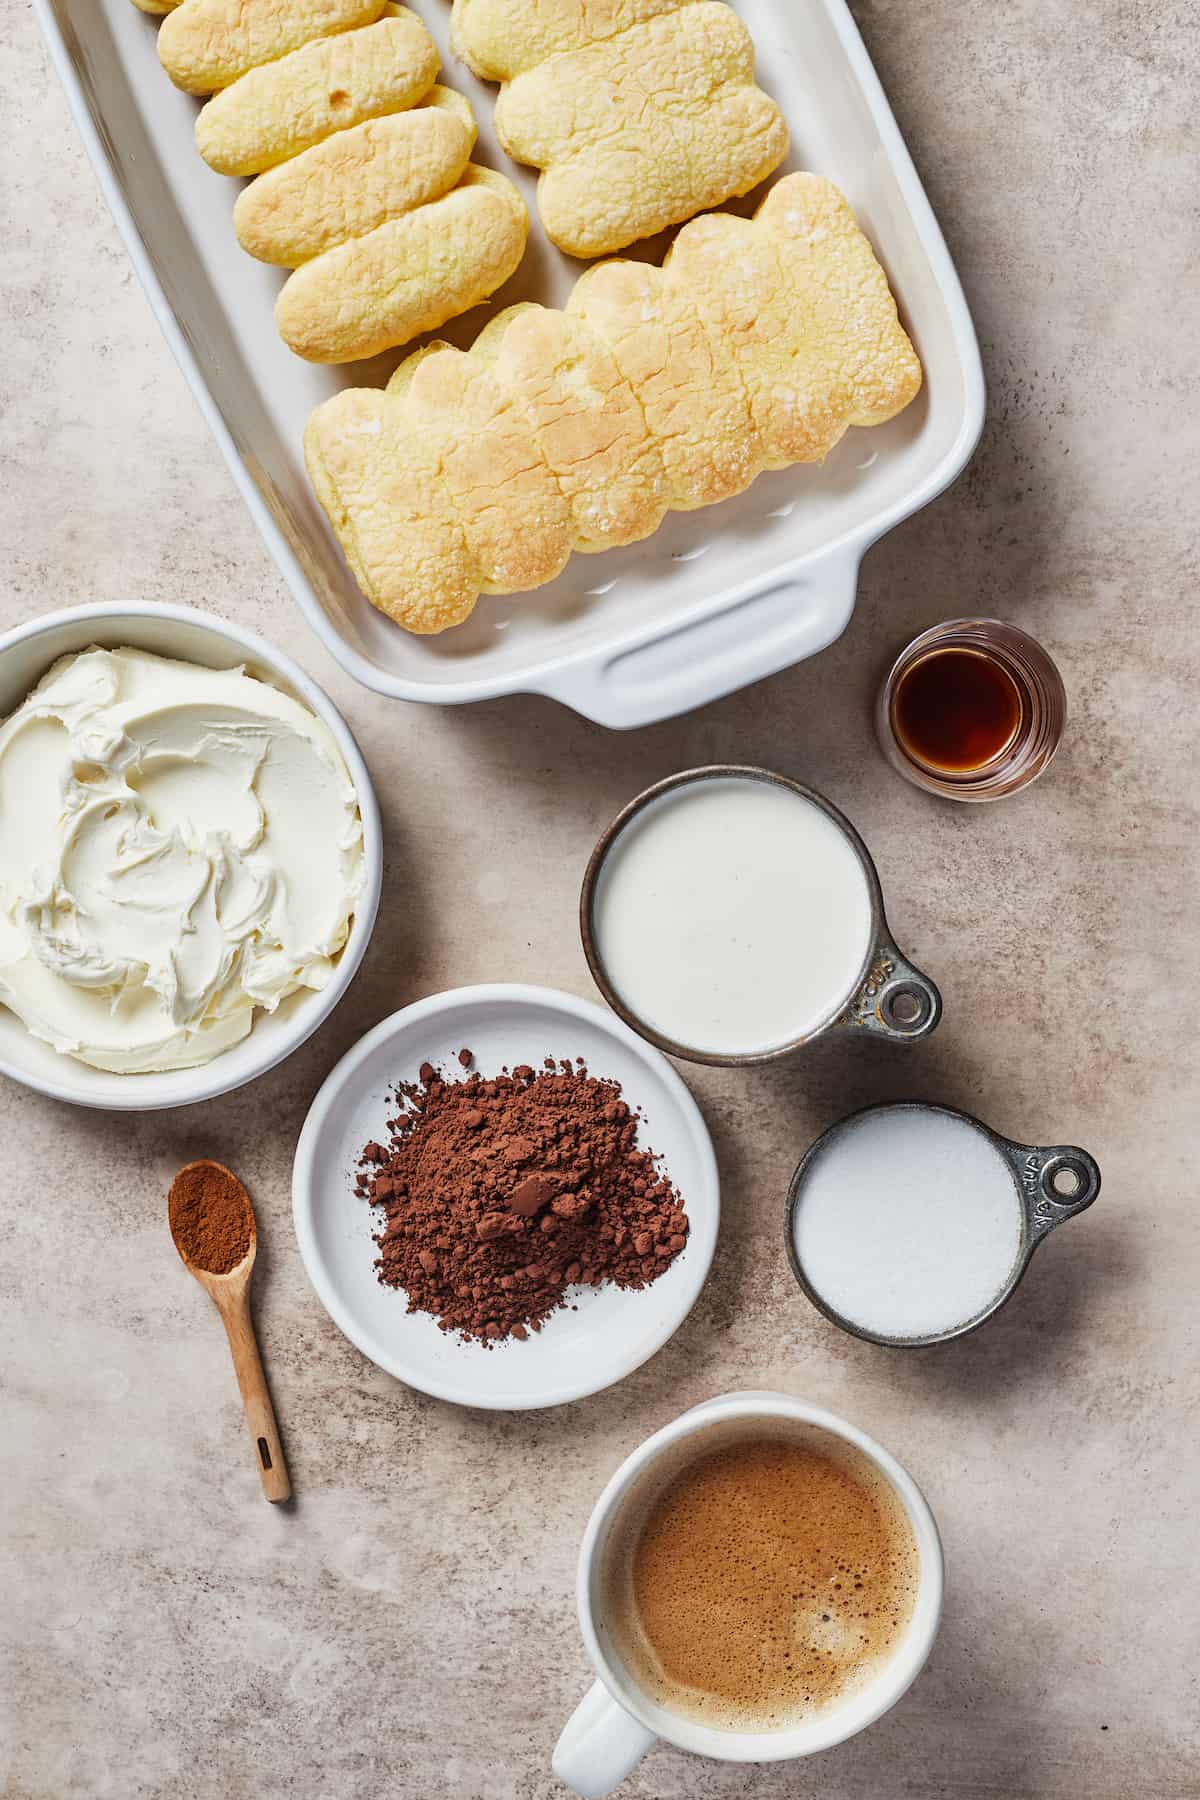 From top: Ladyfinger cookies, vanilla, whipping cream, sugar, espresso, cocoa powder, cinnamon, mascarpone cheese.